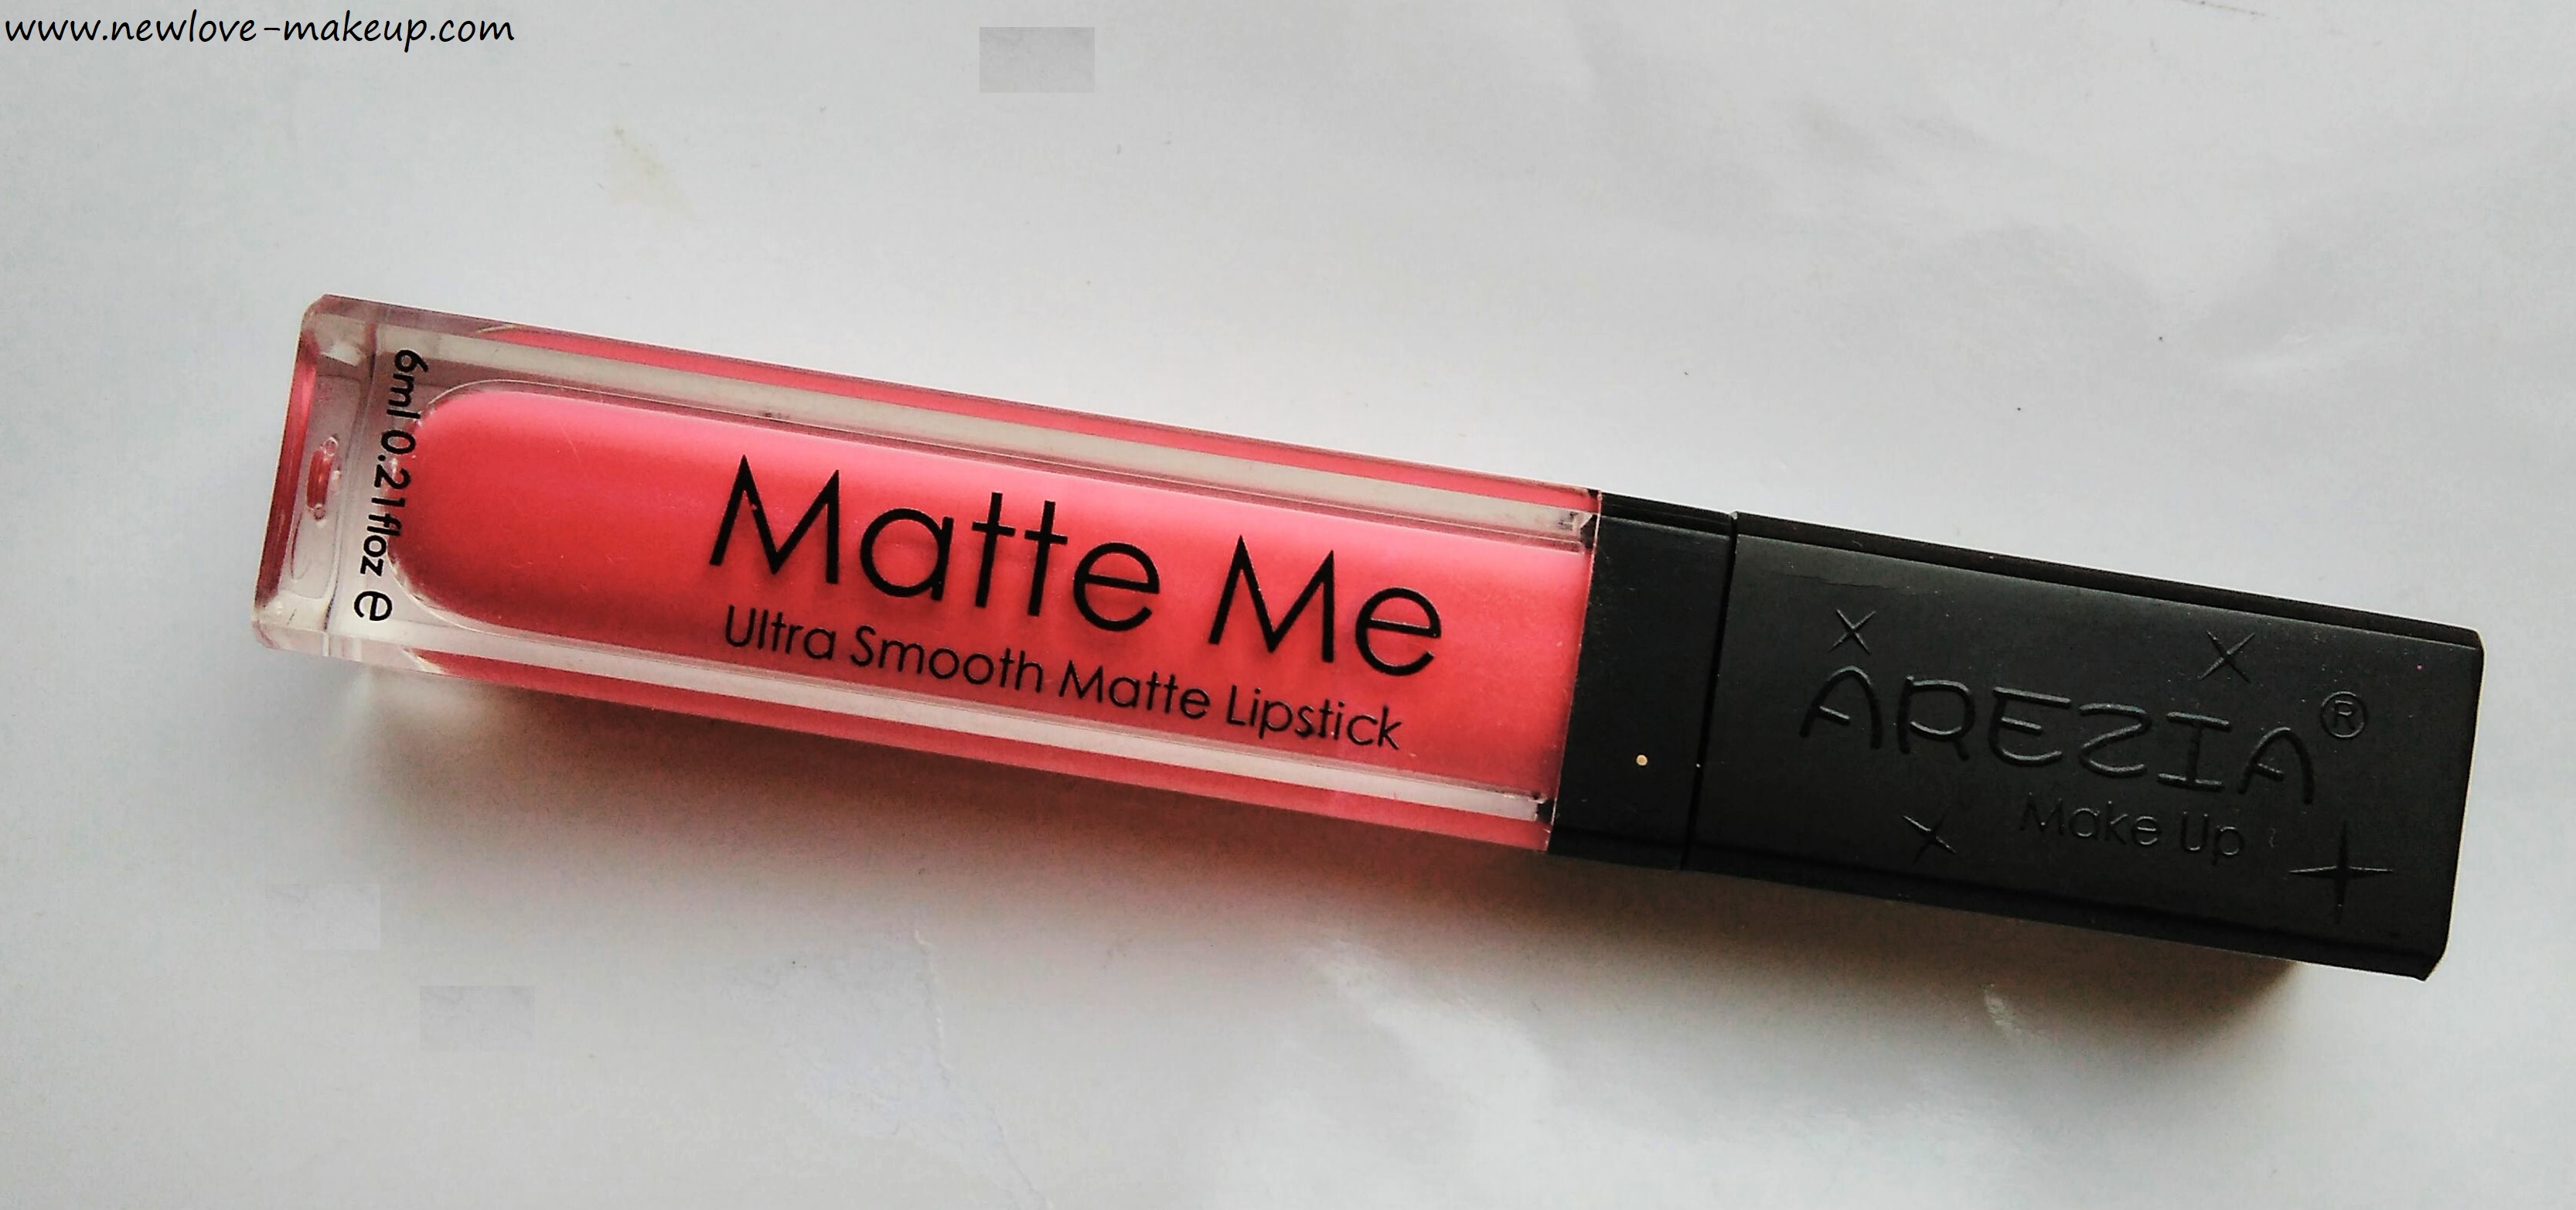 Arezia Matte Me Liquid Lipstick Rose Blossom Review - Sleek Matte Me Dupe?